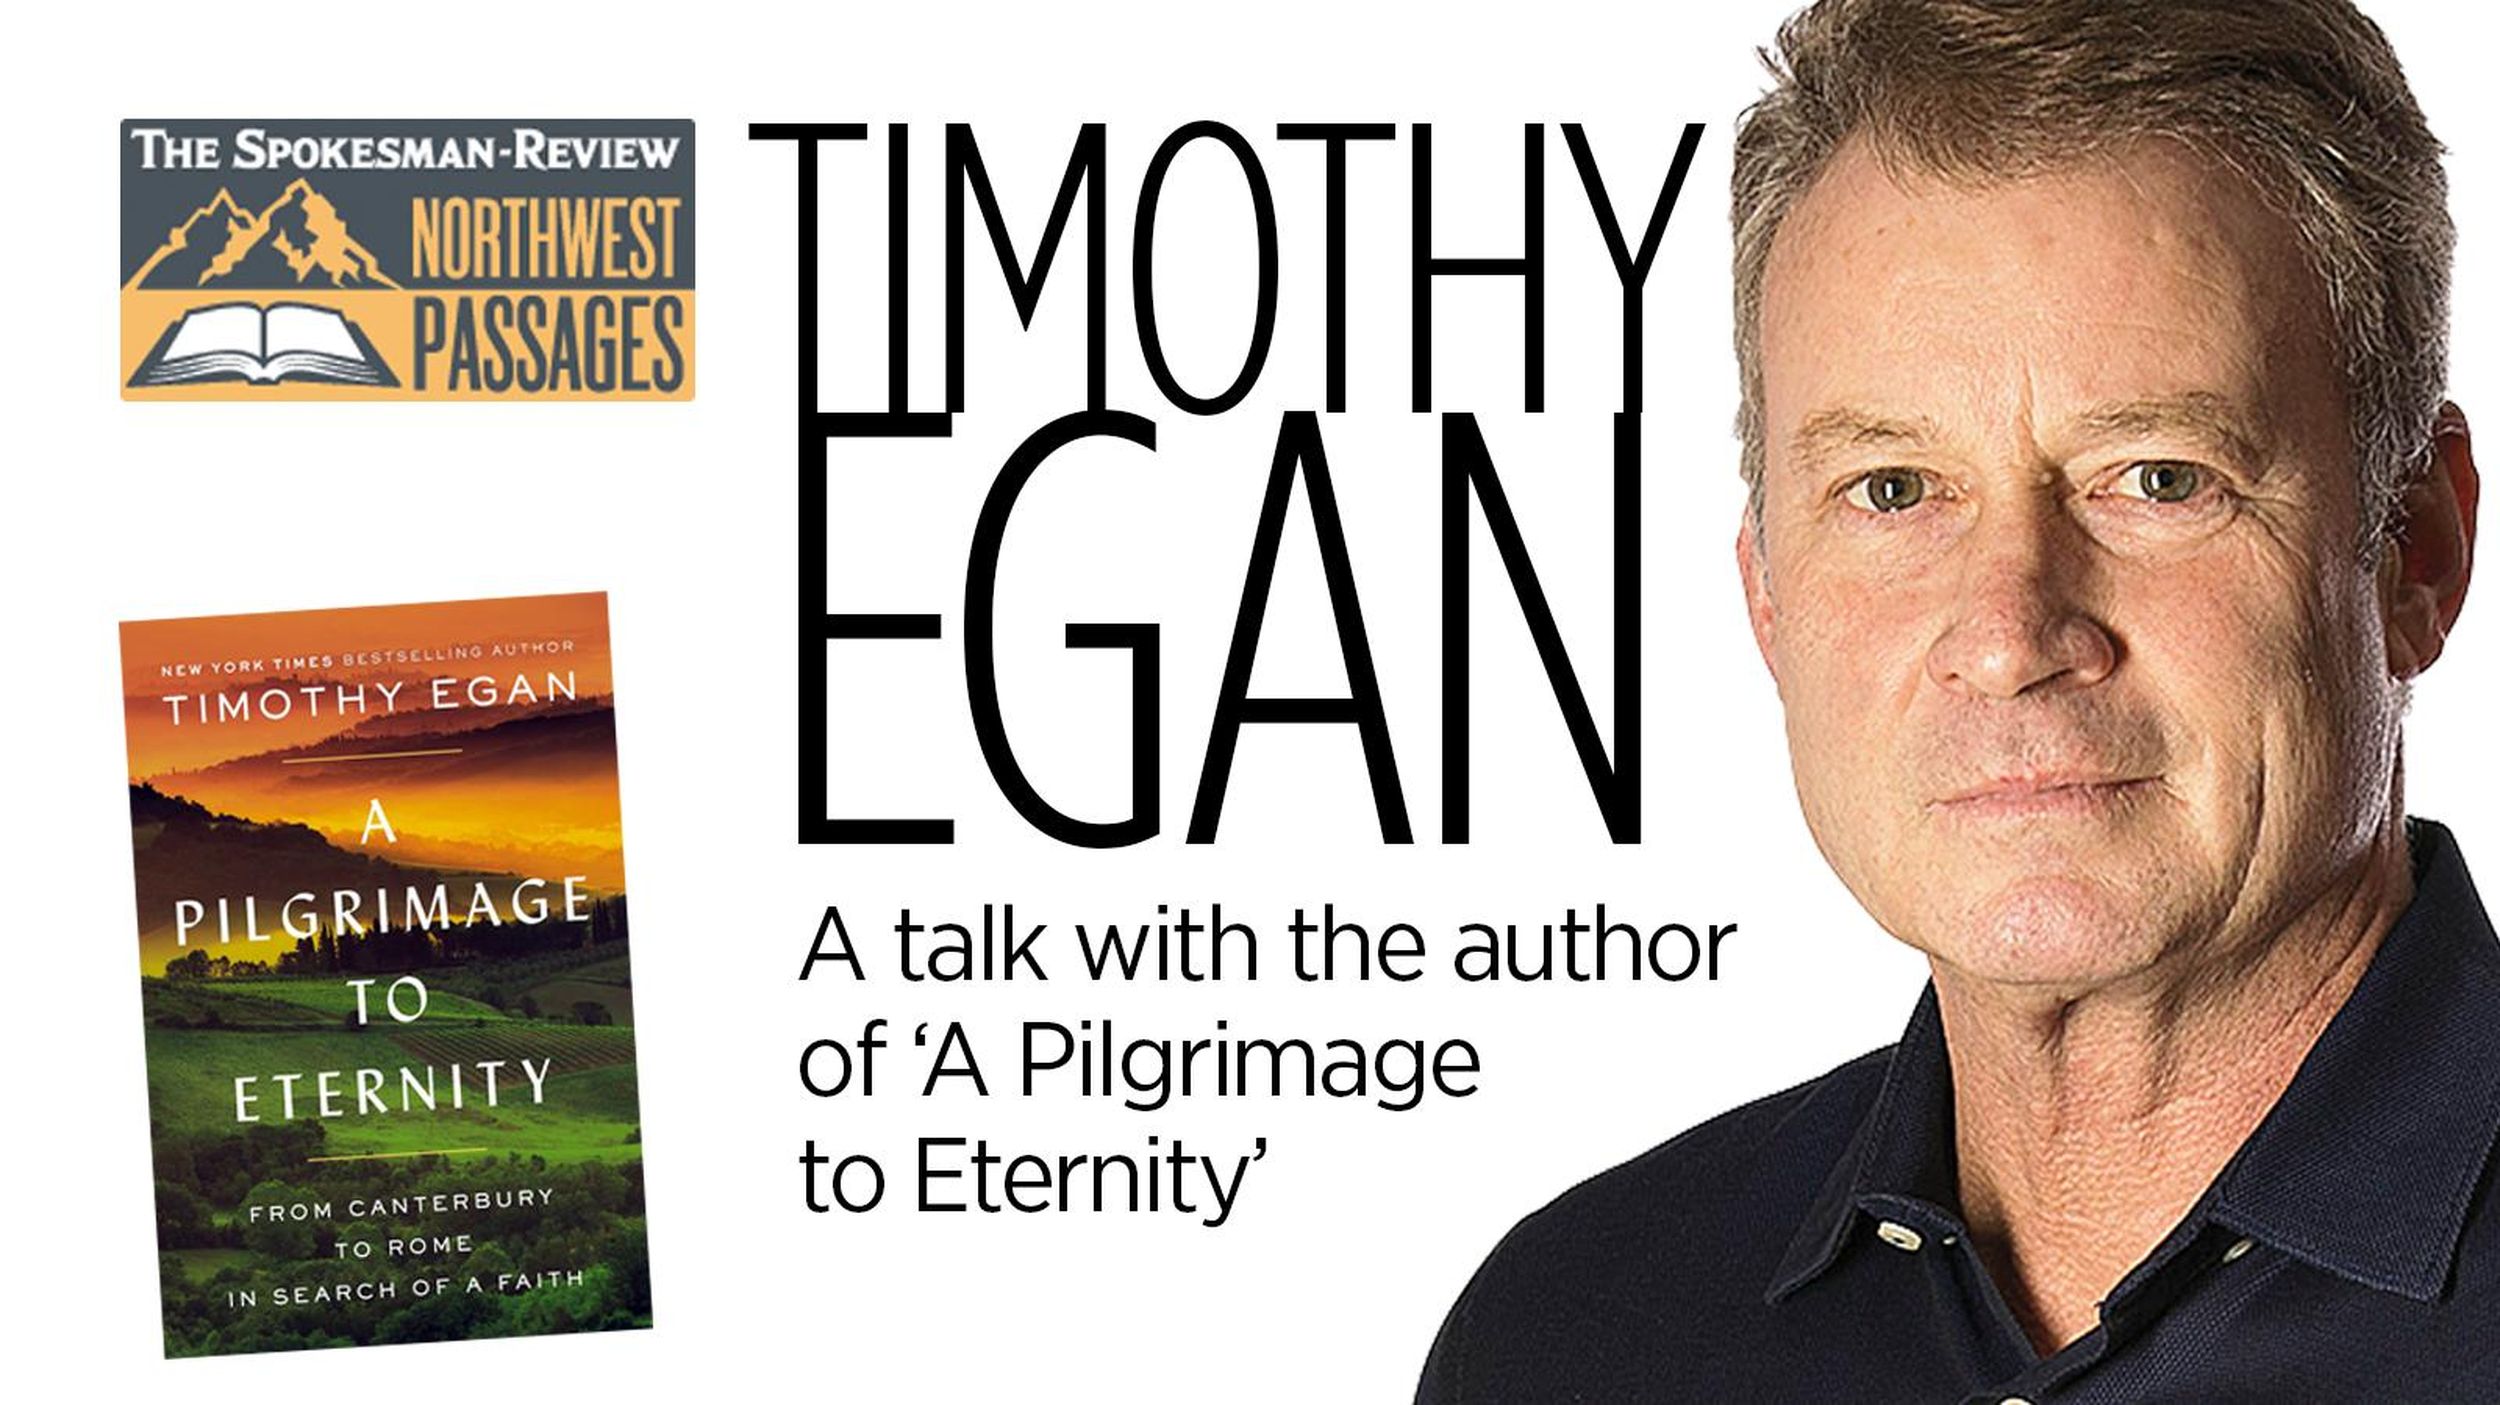 Award-winning author Timothy Egan to speak Oct. 19 at Friends of